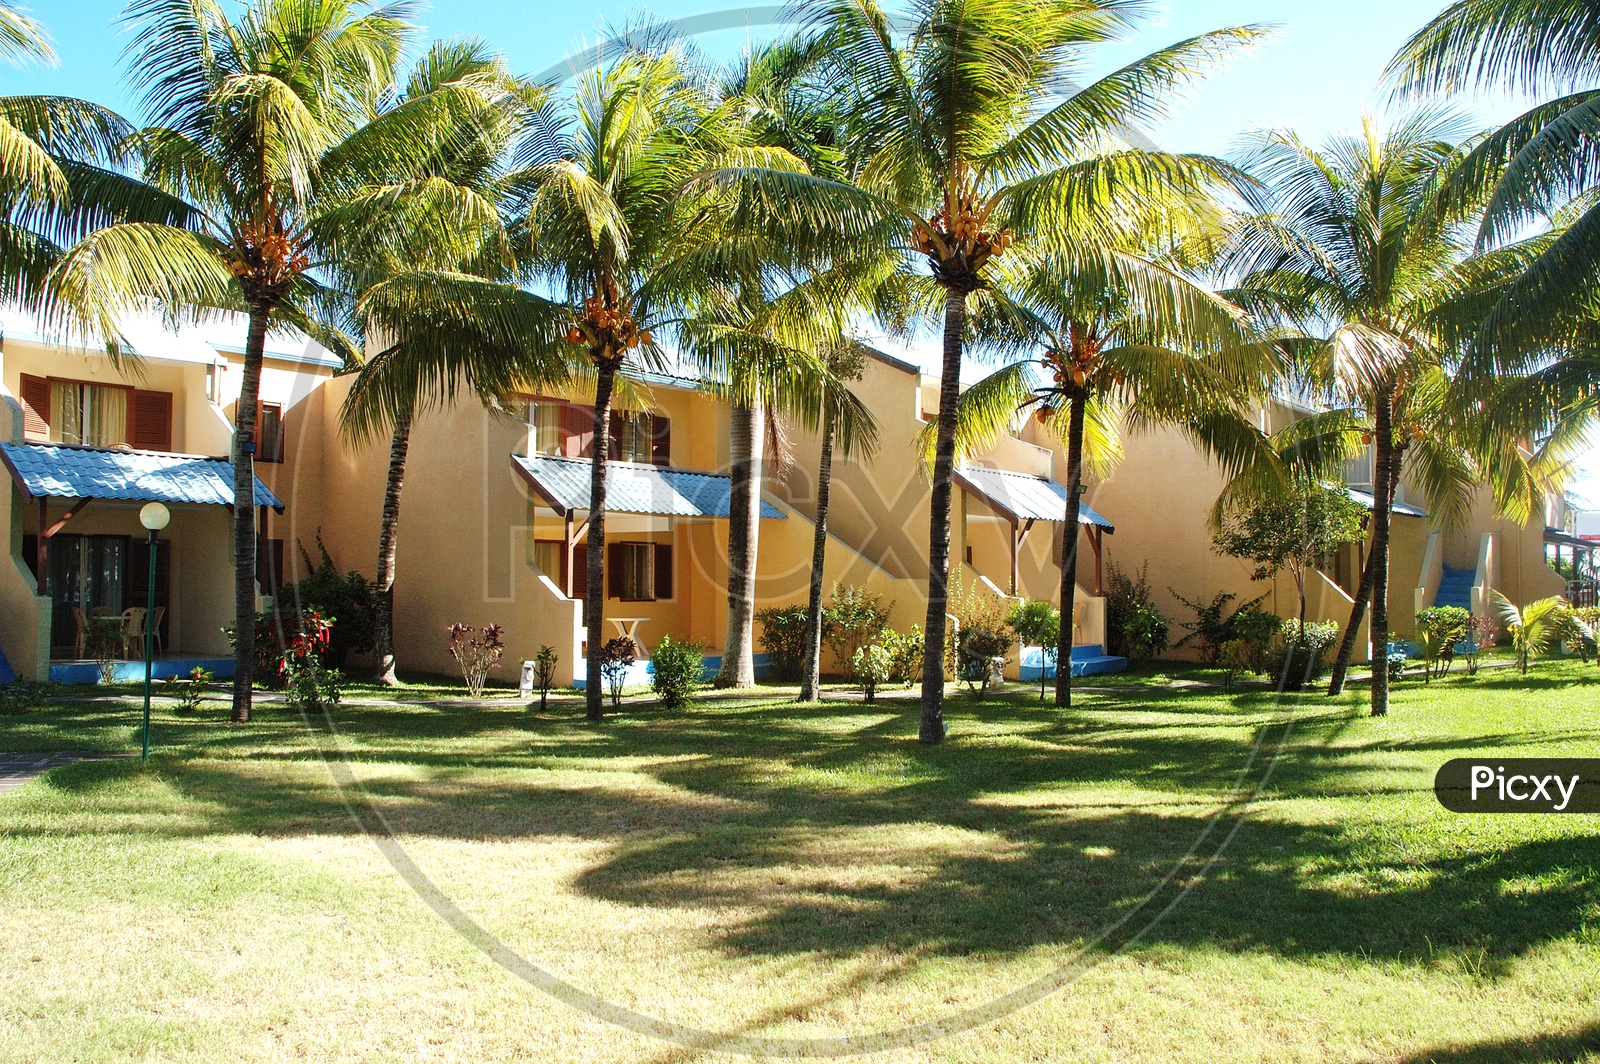 Coconut trees alongside the houses